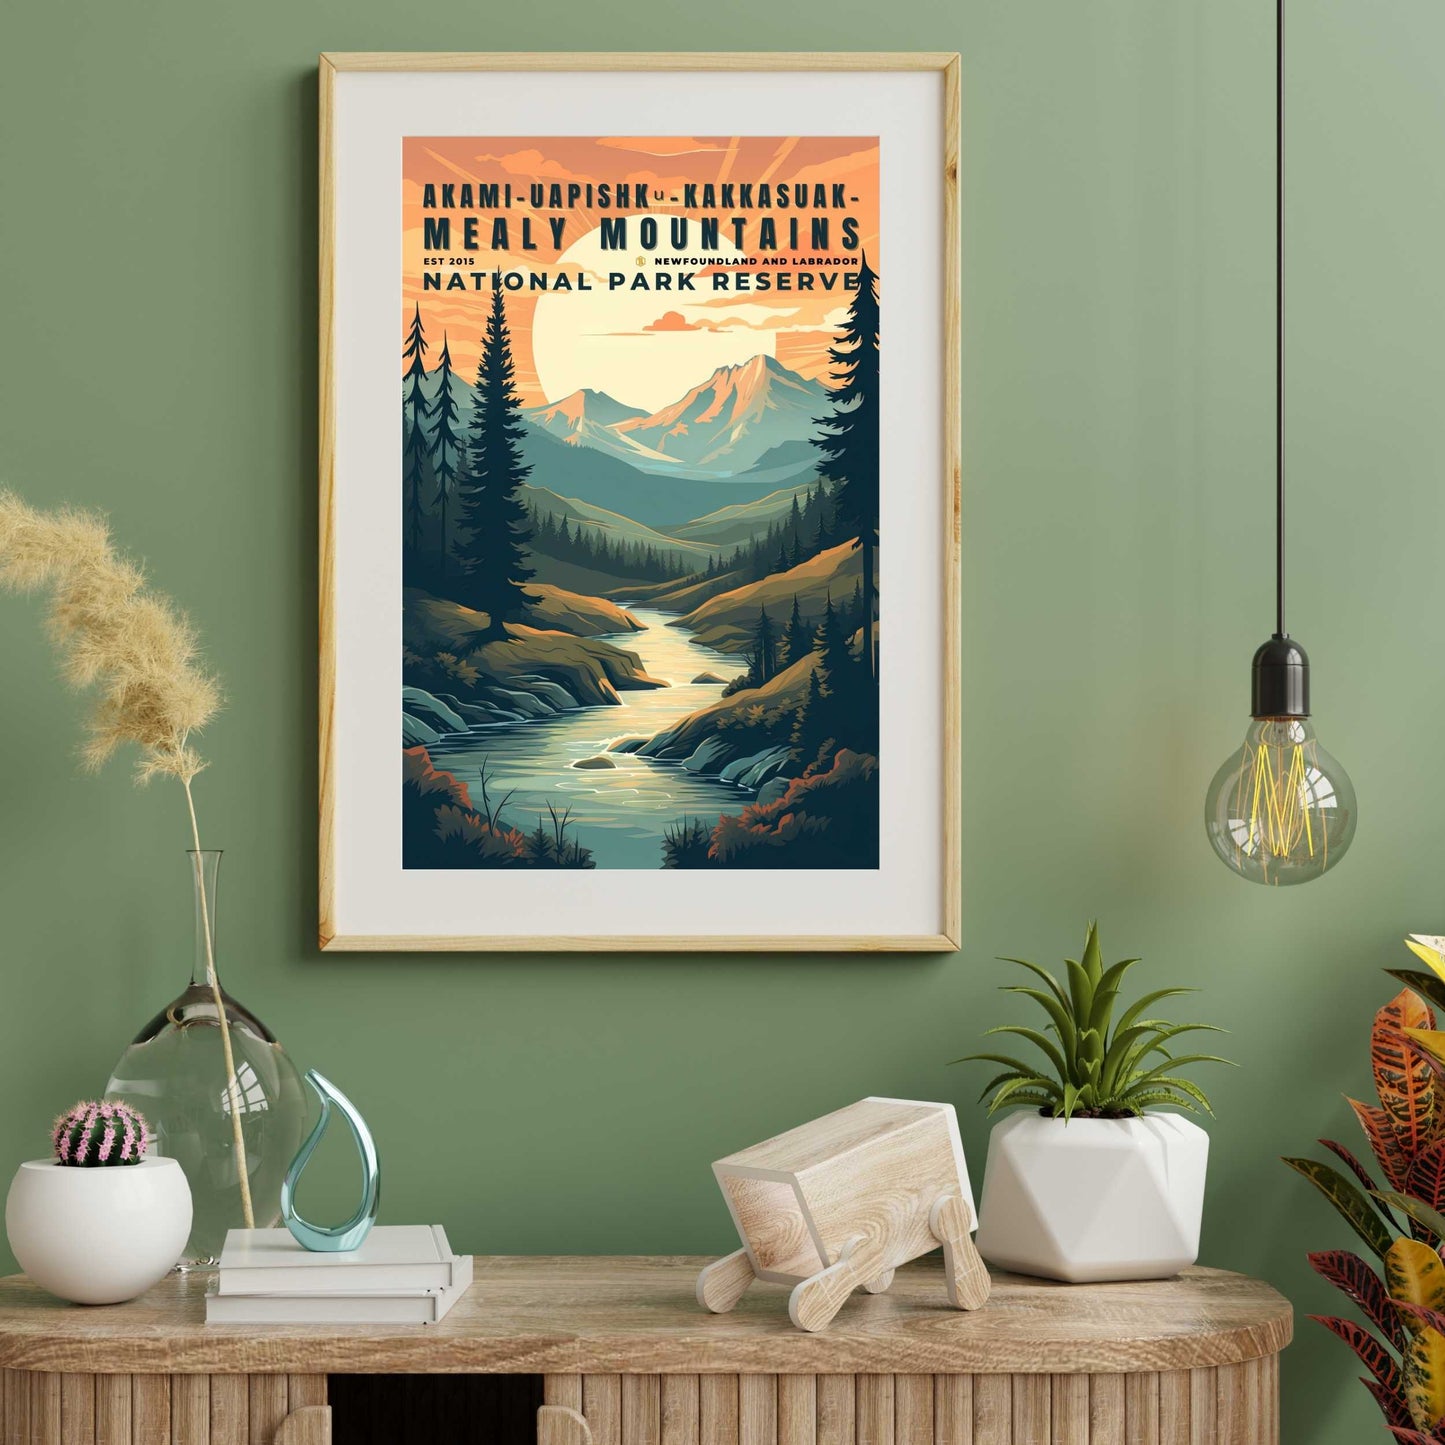 Akami-Uapishk-KakKasuak-Mealy Mountains National Park Poster | S01